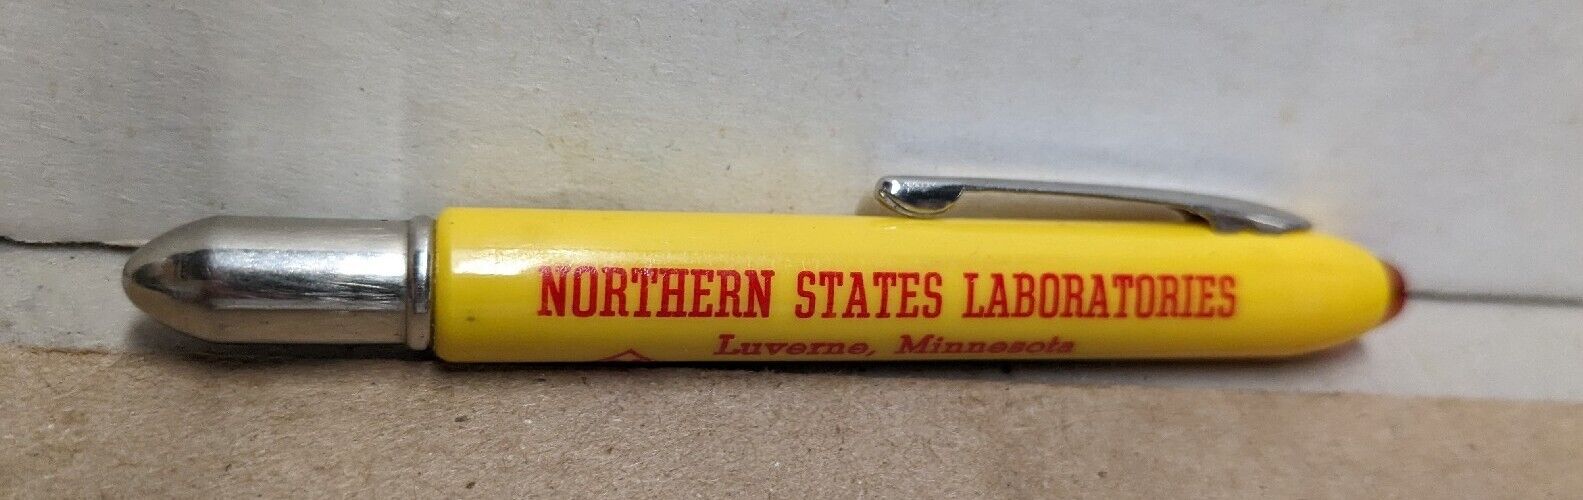 Vintage Northern States Laboratories Luverne MN Bullet Pen Nox Antibiotics 